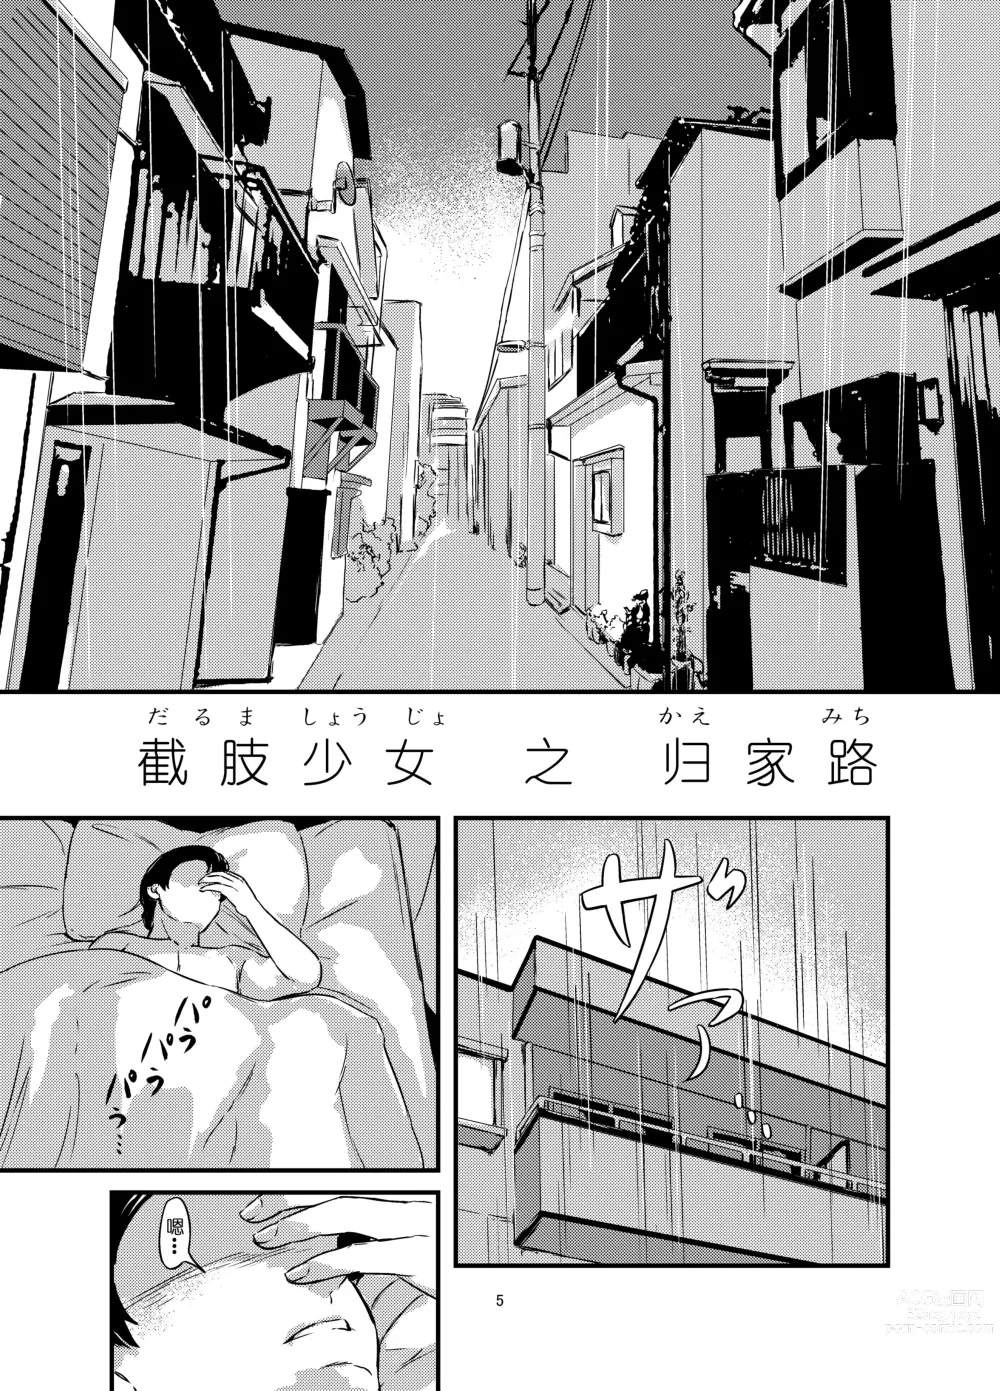 Page 6 of doujinshi 截肢少女之归家路